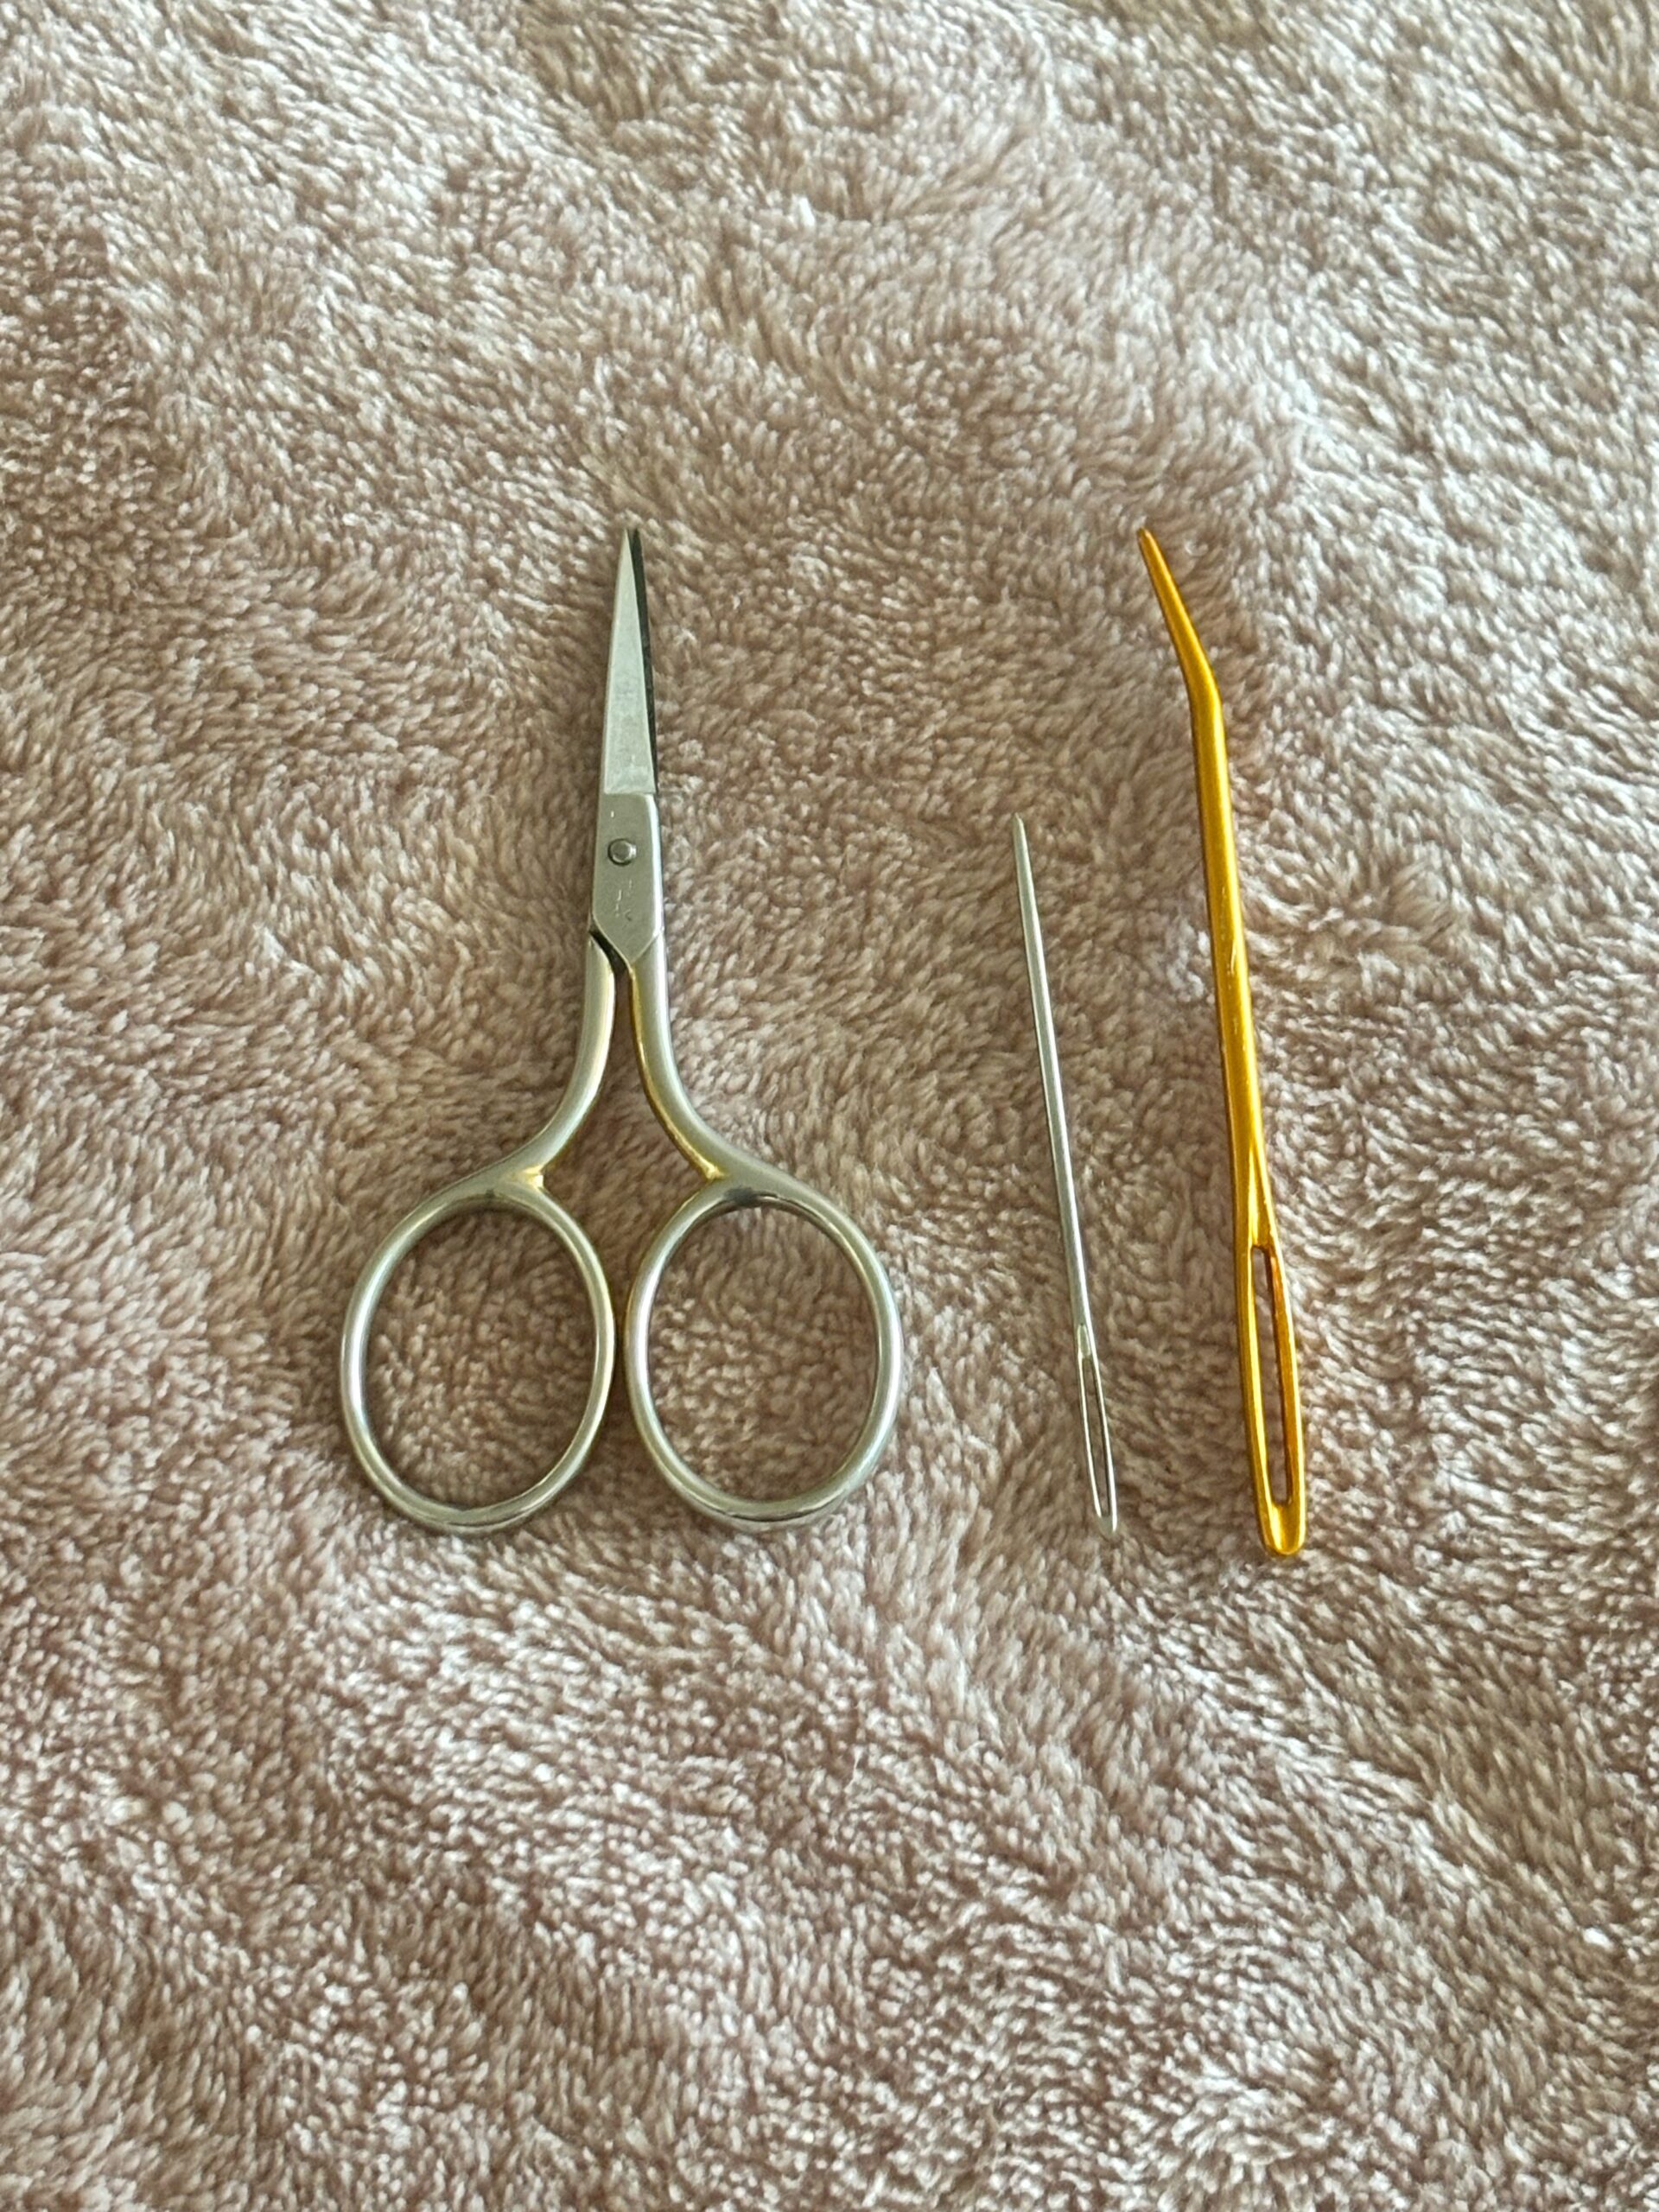 Yarn Needle and Scissors